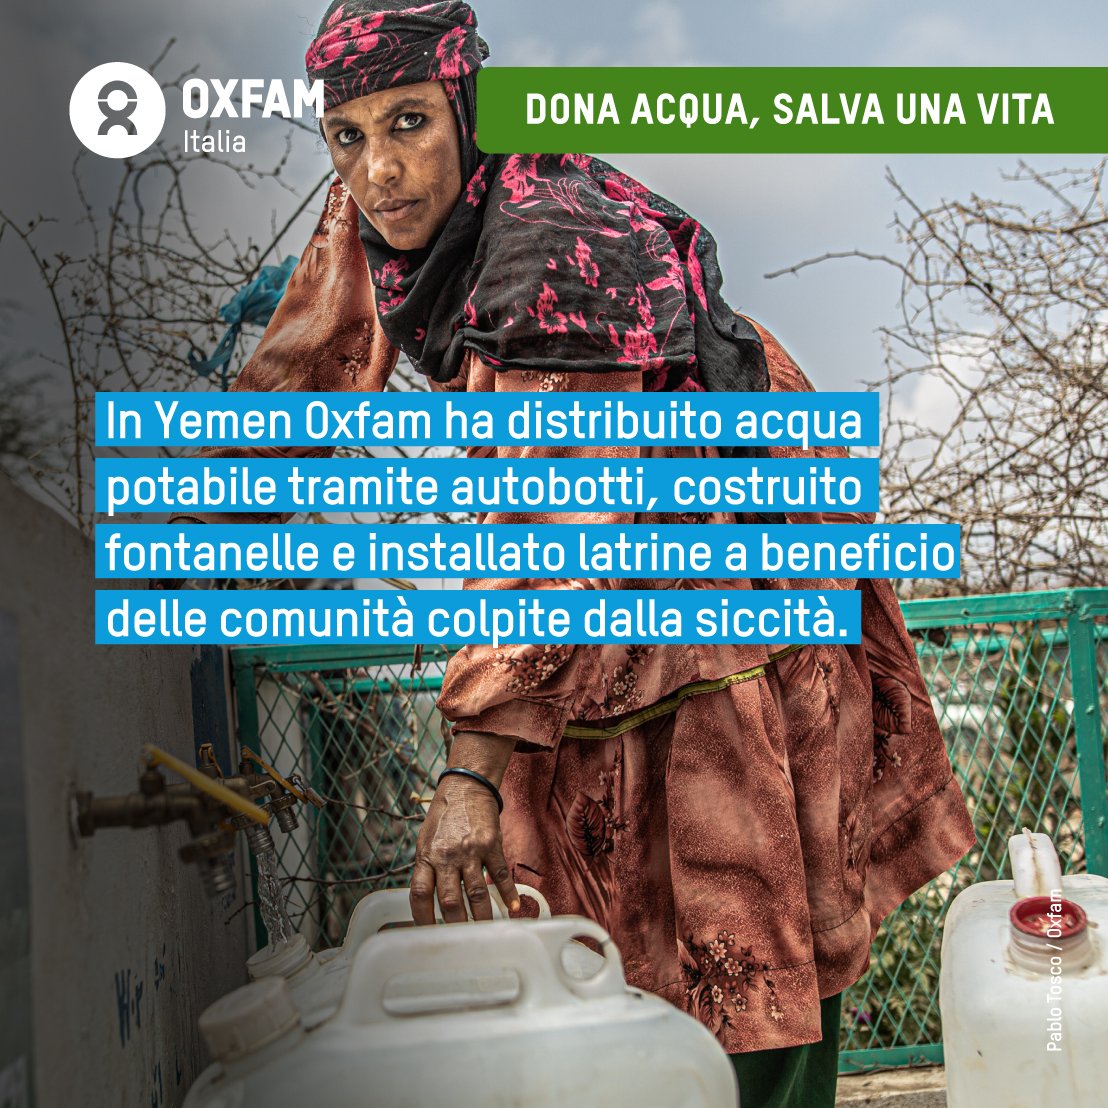 OxfamItalia tweet picture